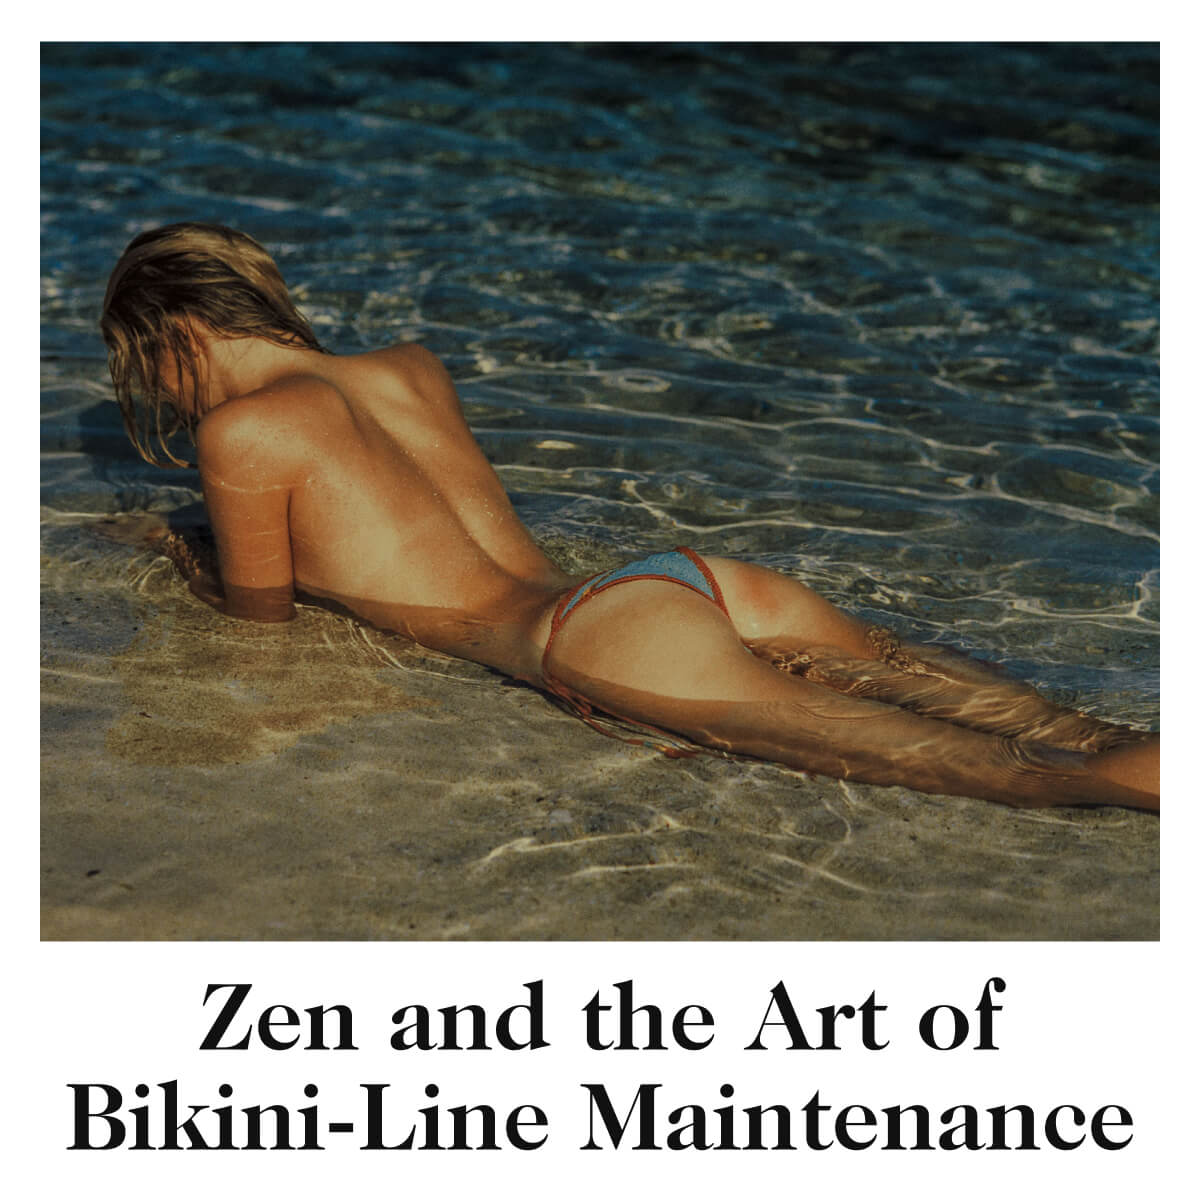 Zen and the Art of Bikini-Line Maintenance